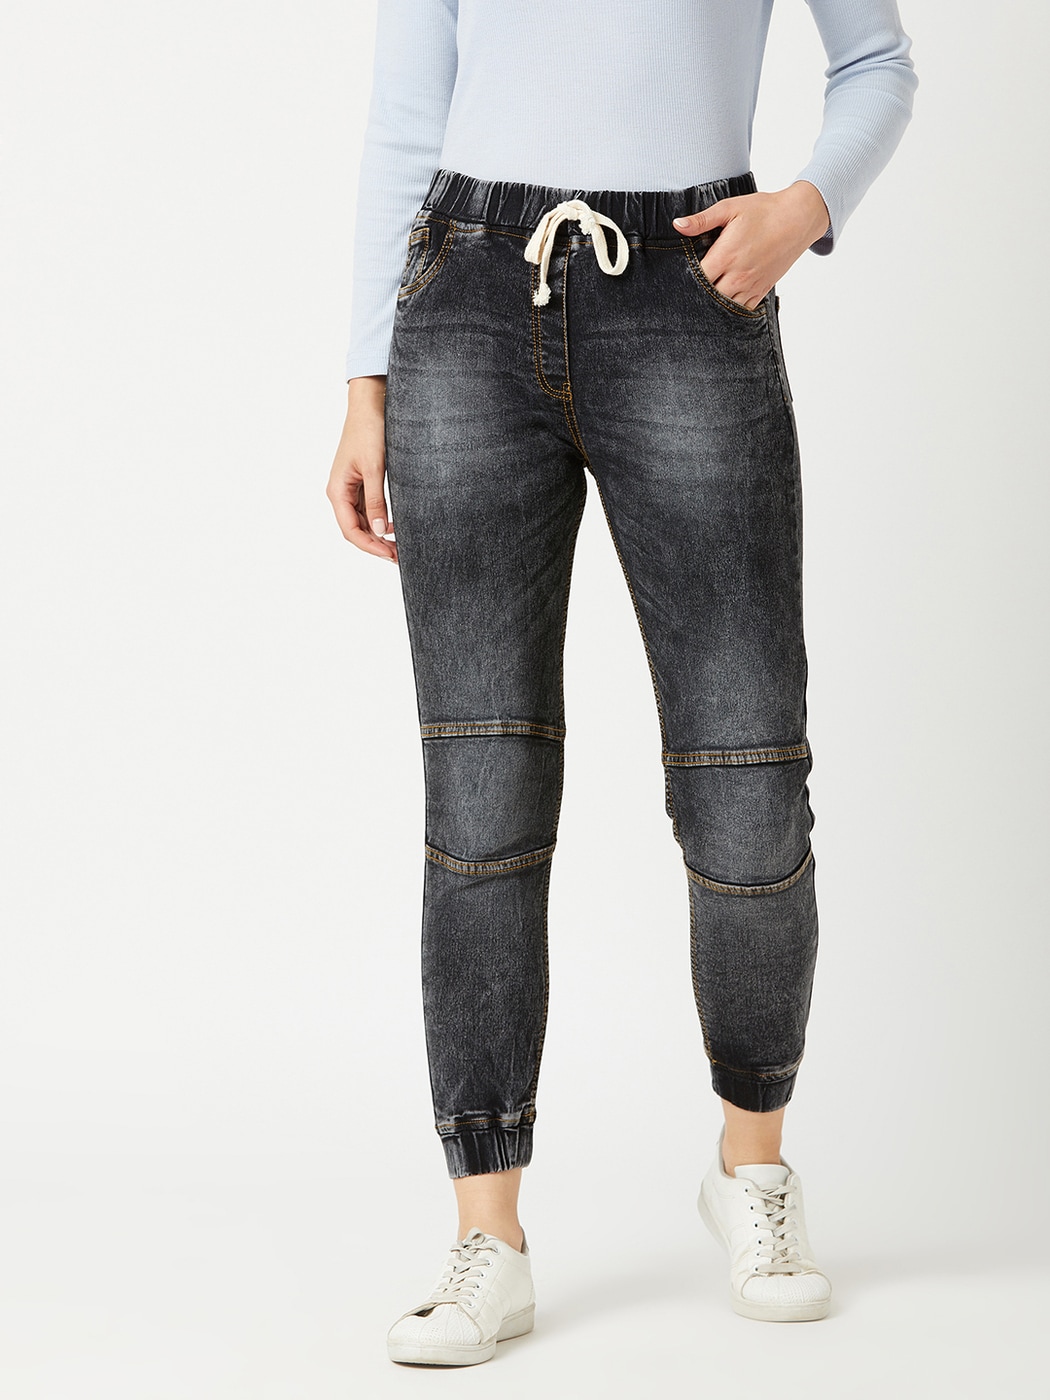 Sidefeel Women Distressed Pockets Denim Joggers Elastic Drawstring Waist Jeans  Pants US4 Light Blue at Amazon Women's Jeans store